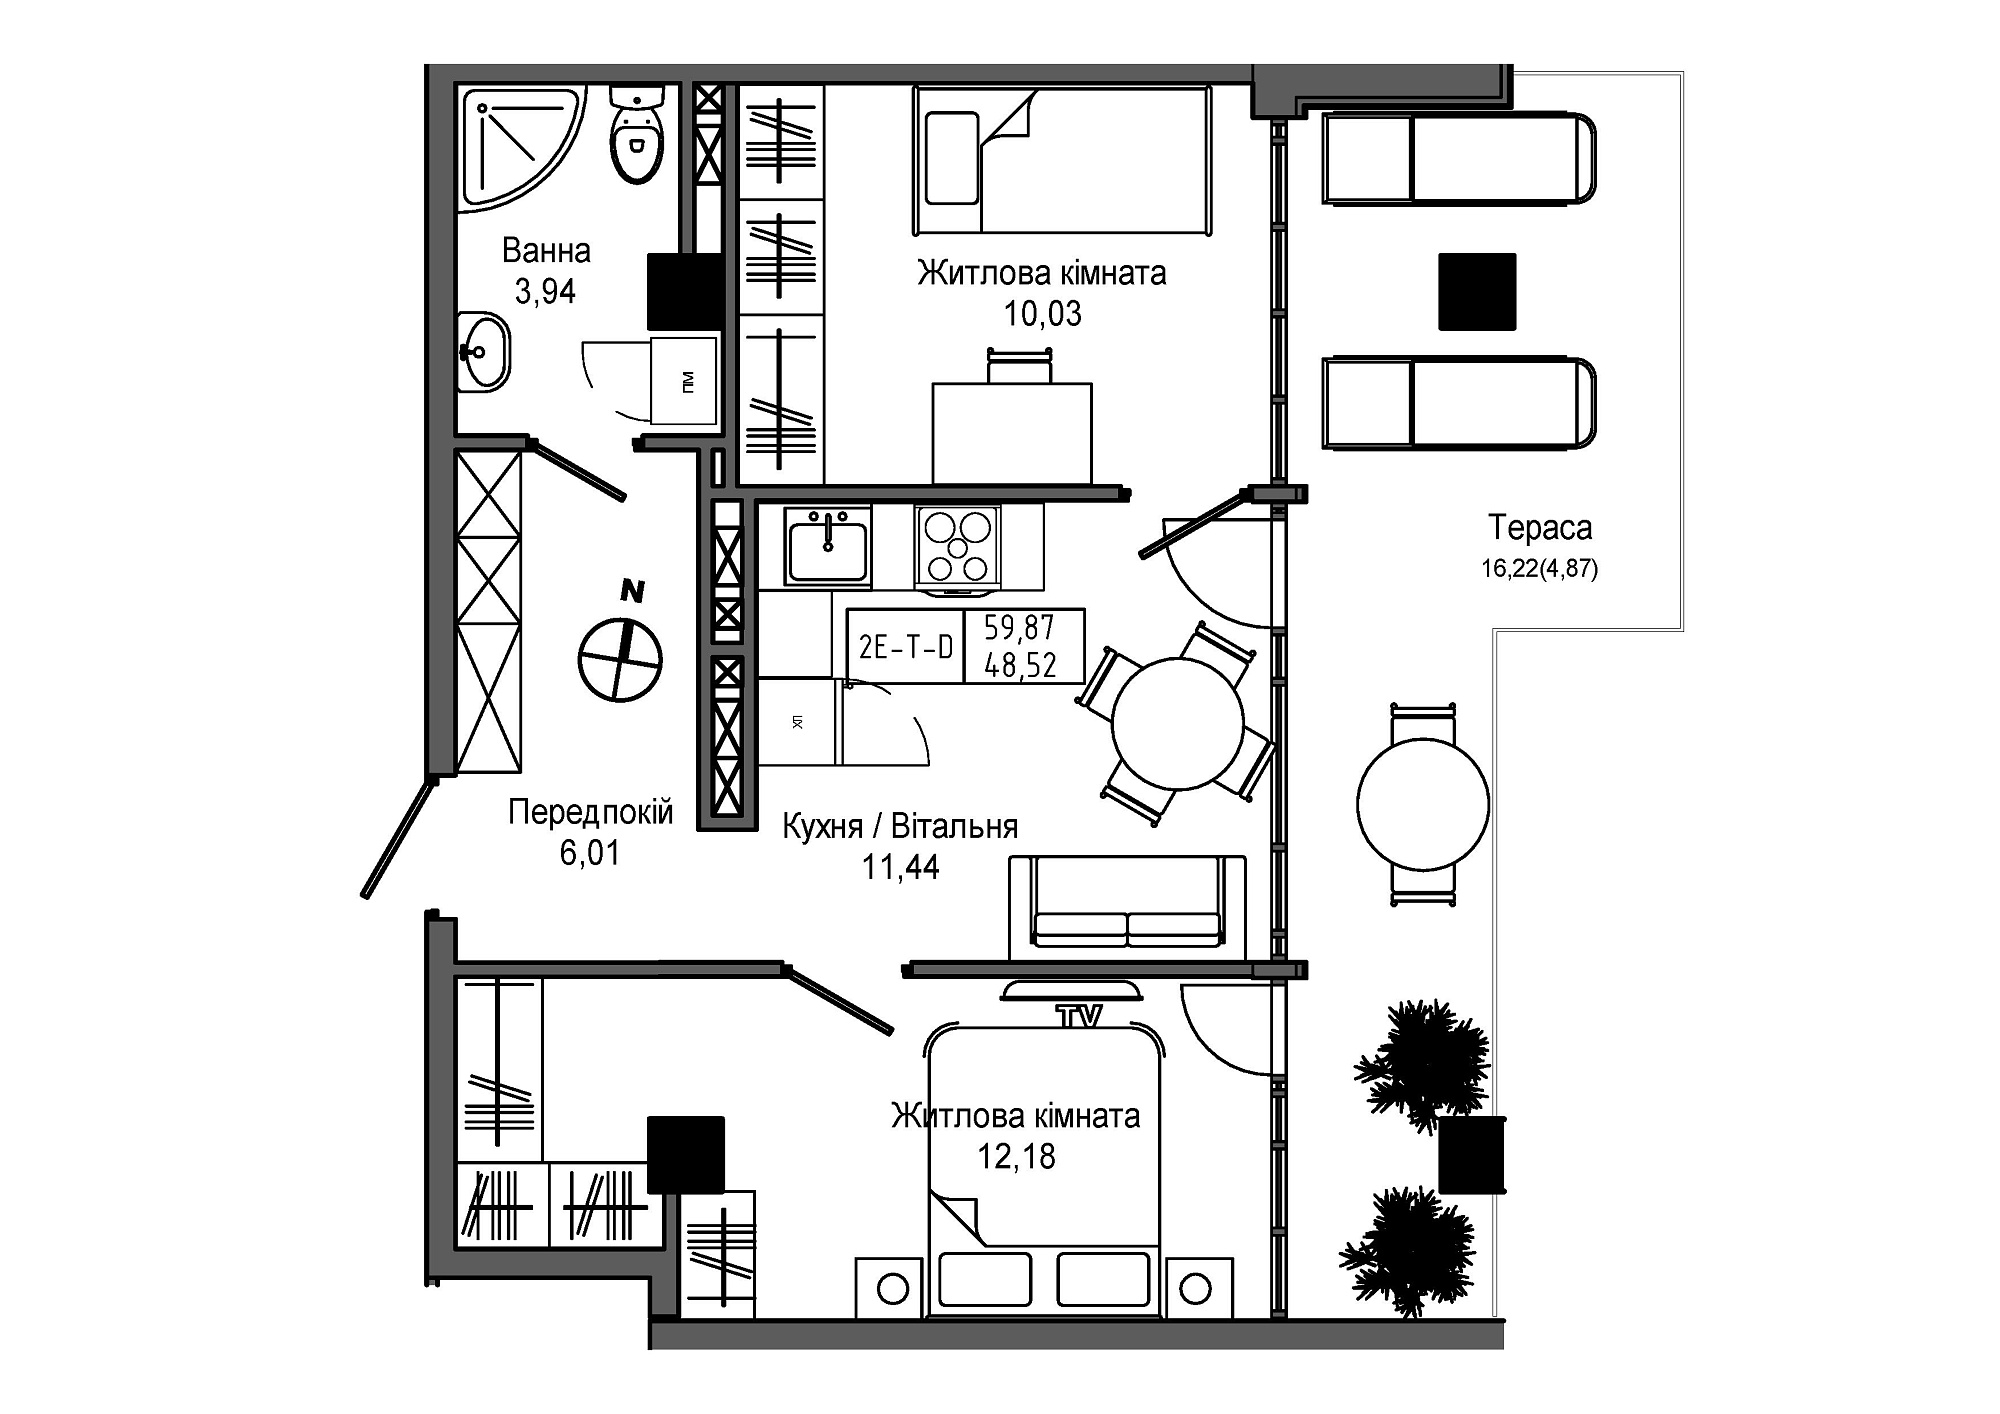 Планування 2-к квартира площею 48.52м2, UM-006-08/0023.